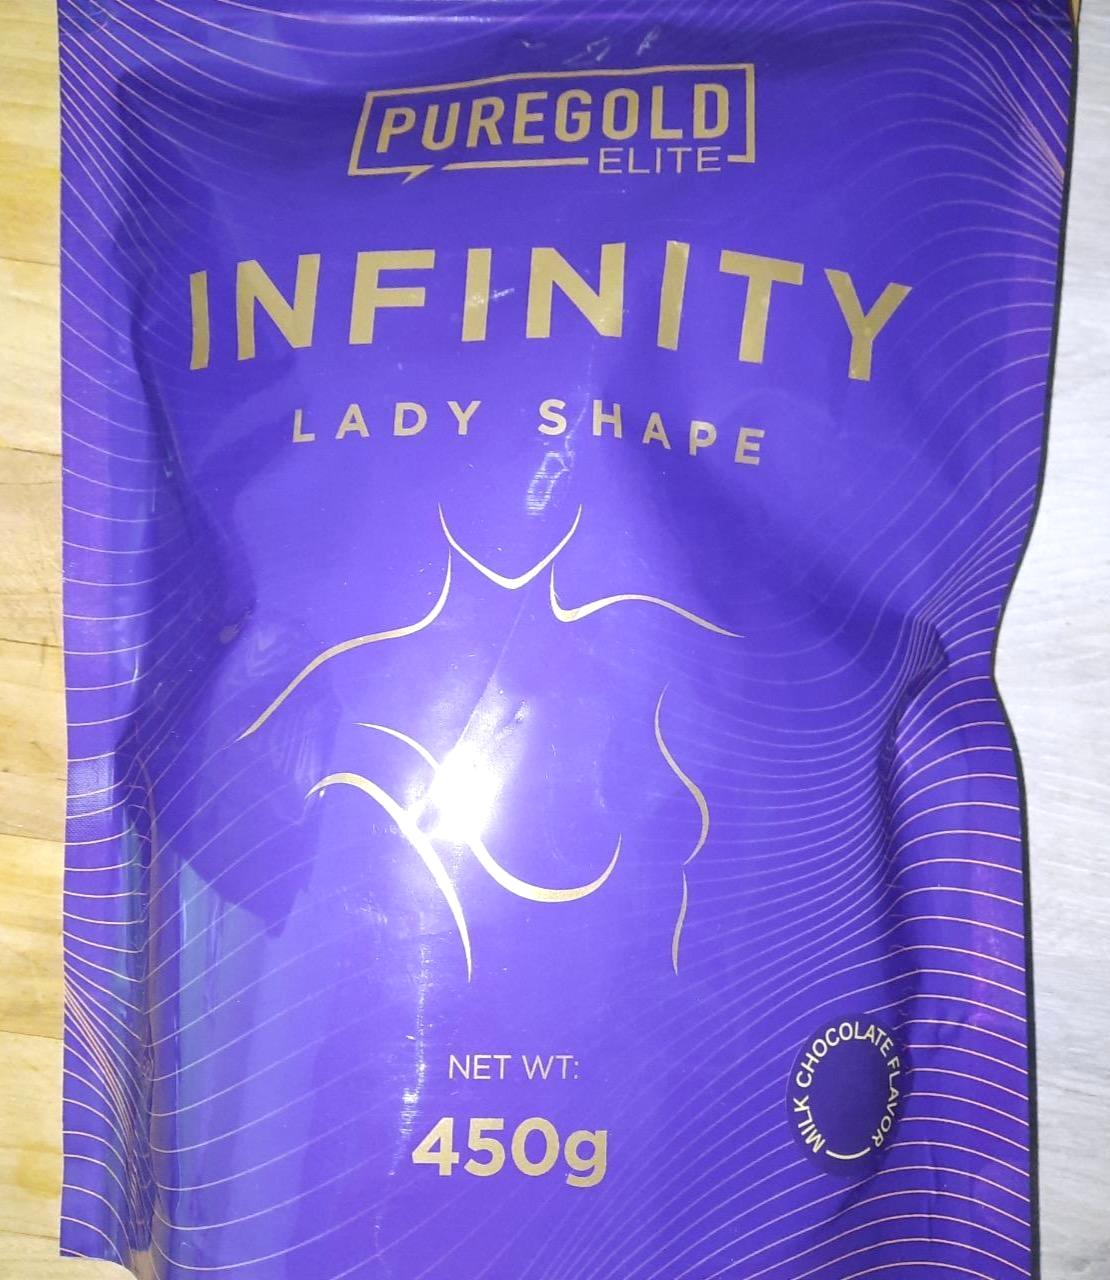 Képek - Infinity Lady Shape Milk chocolate flavor Pure gold elite